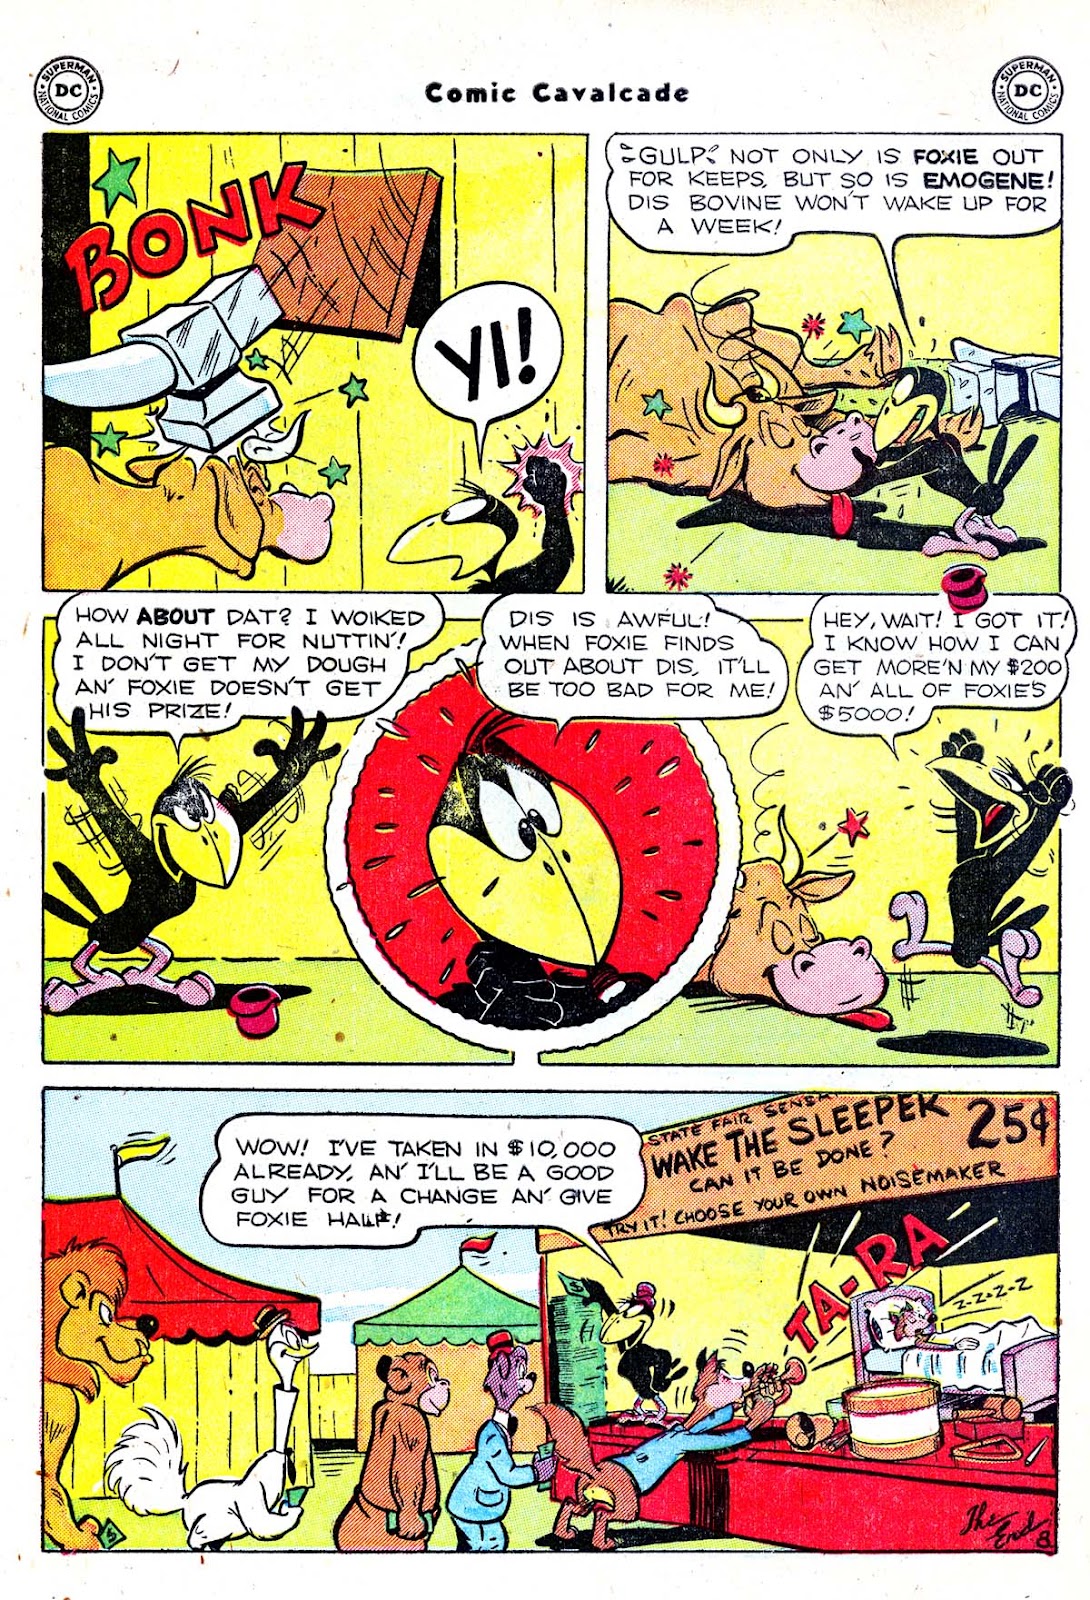 Comic Cavalcade issue 48 - Page 10